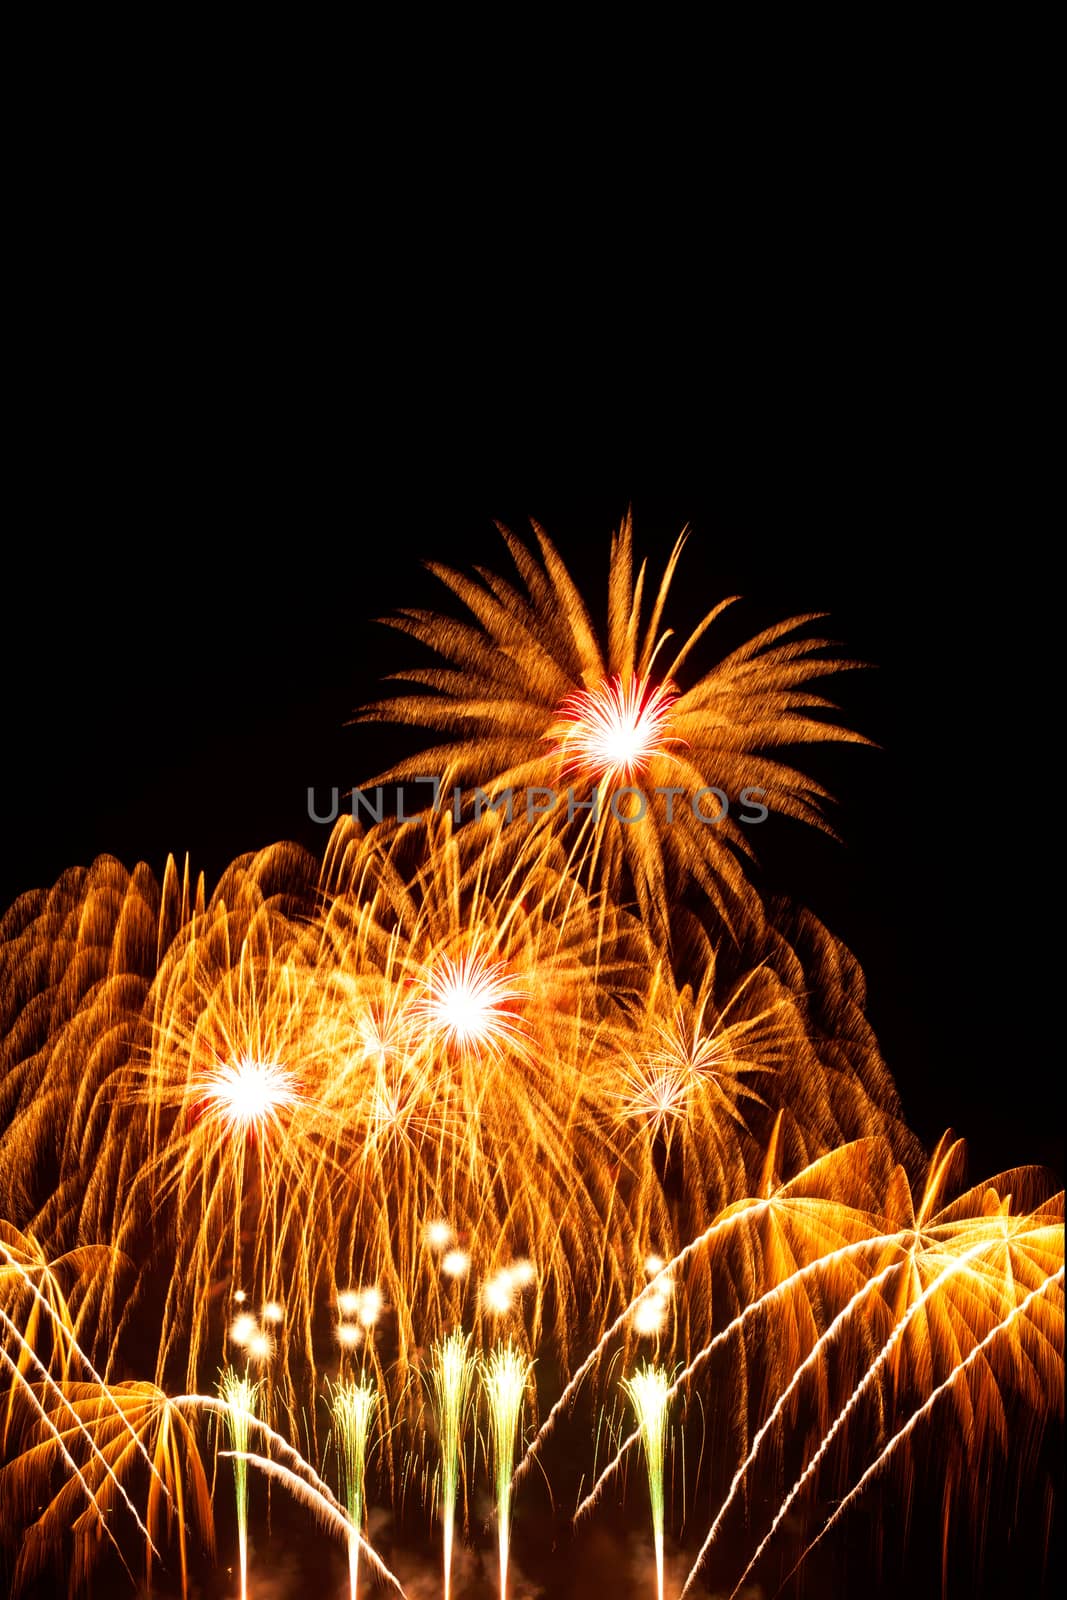 Fireworks light up the sky by jee1999